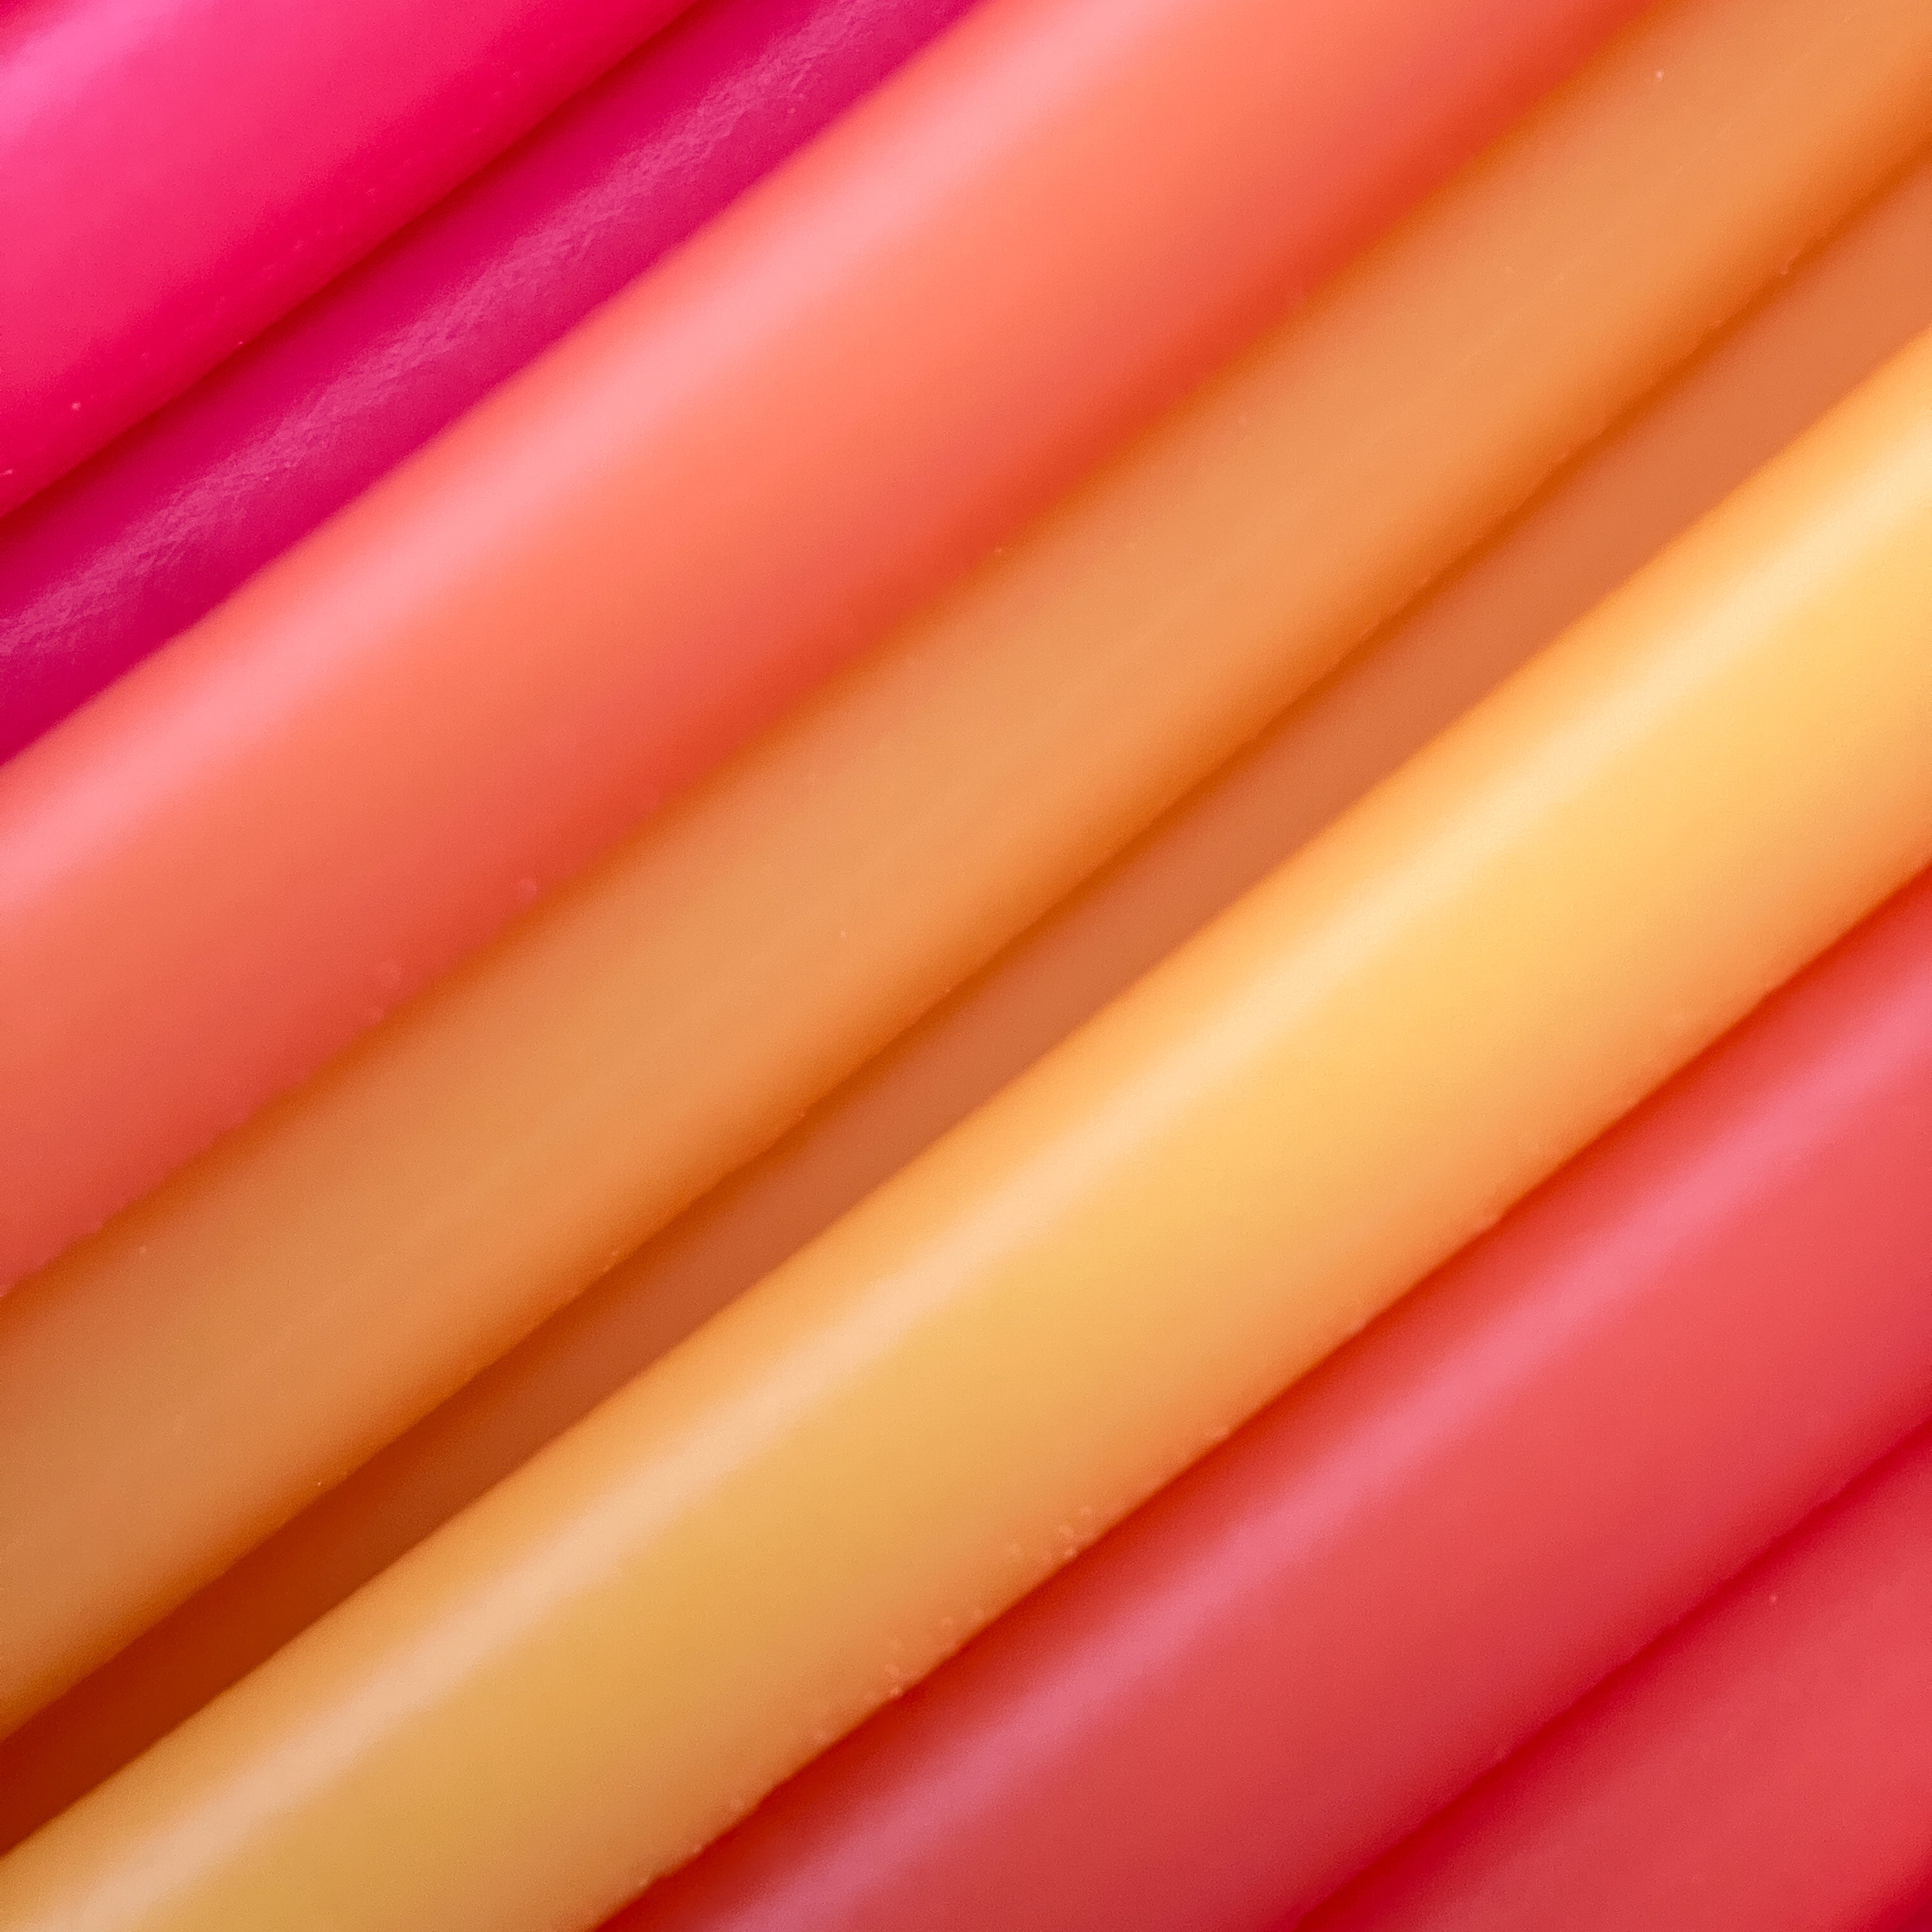 Sunrise (pink → orange → yellow) PLA Filament 1.75mm, 1kg